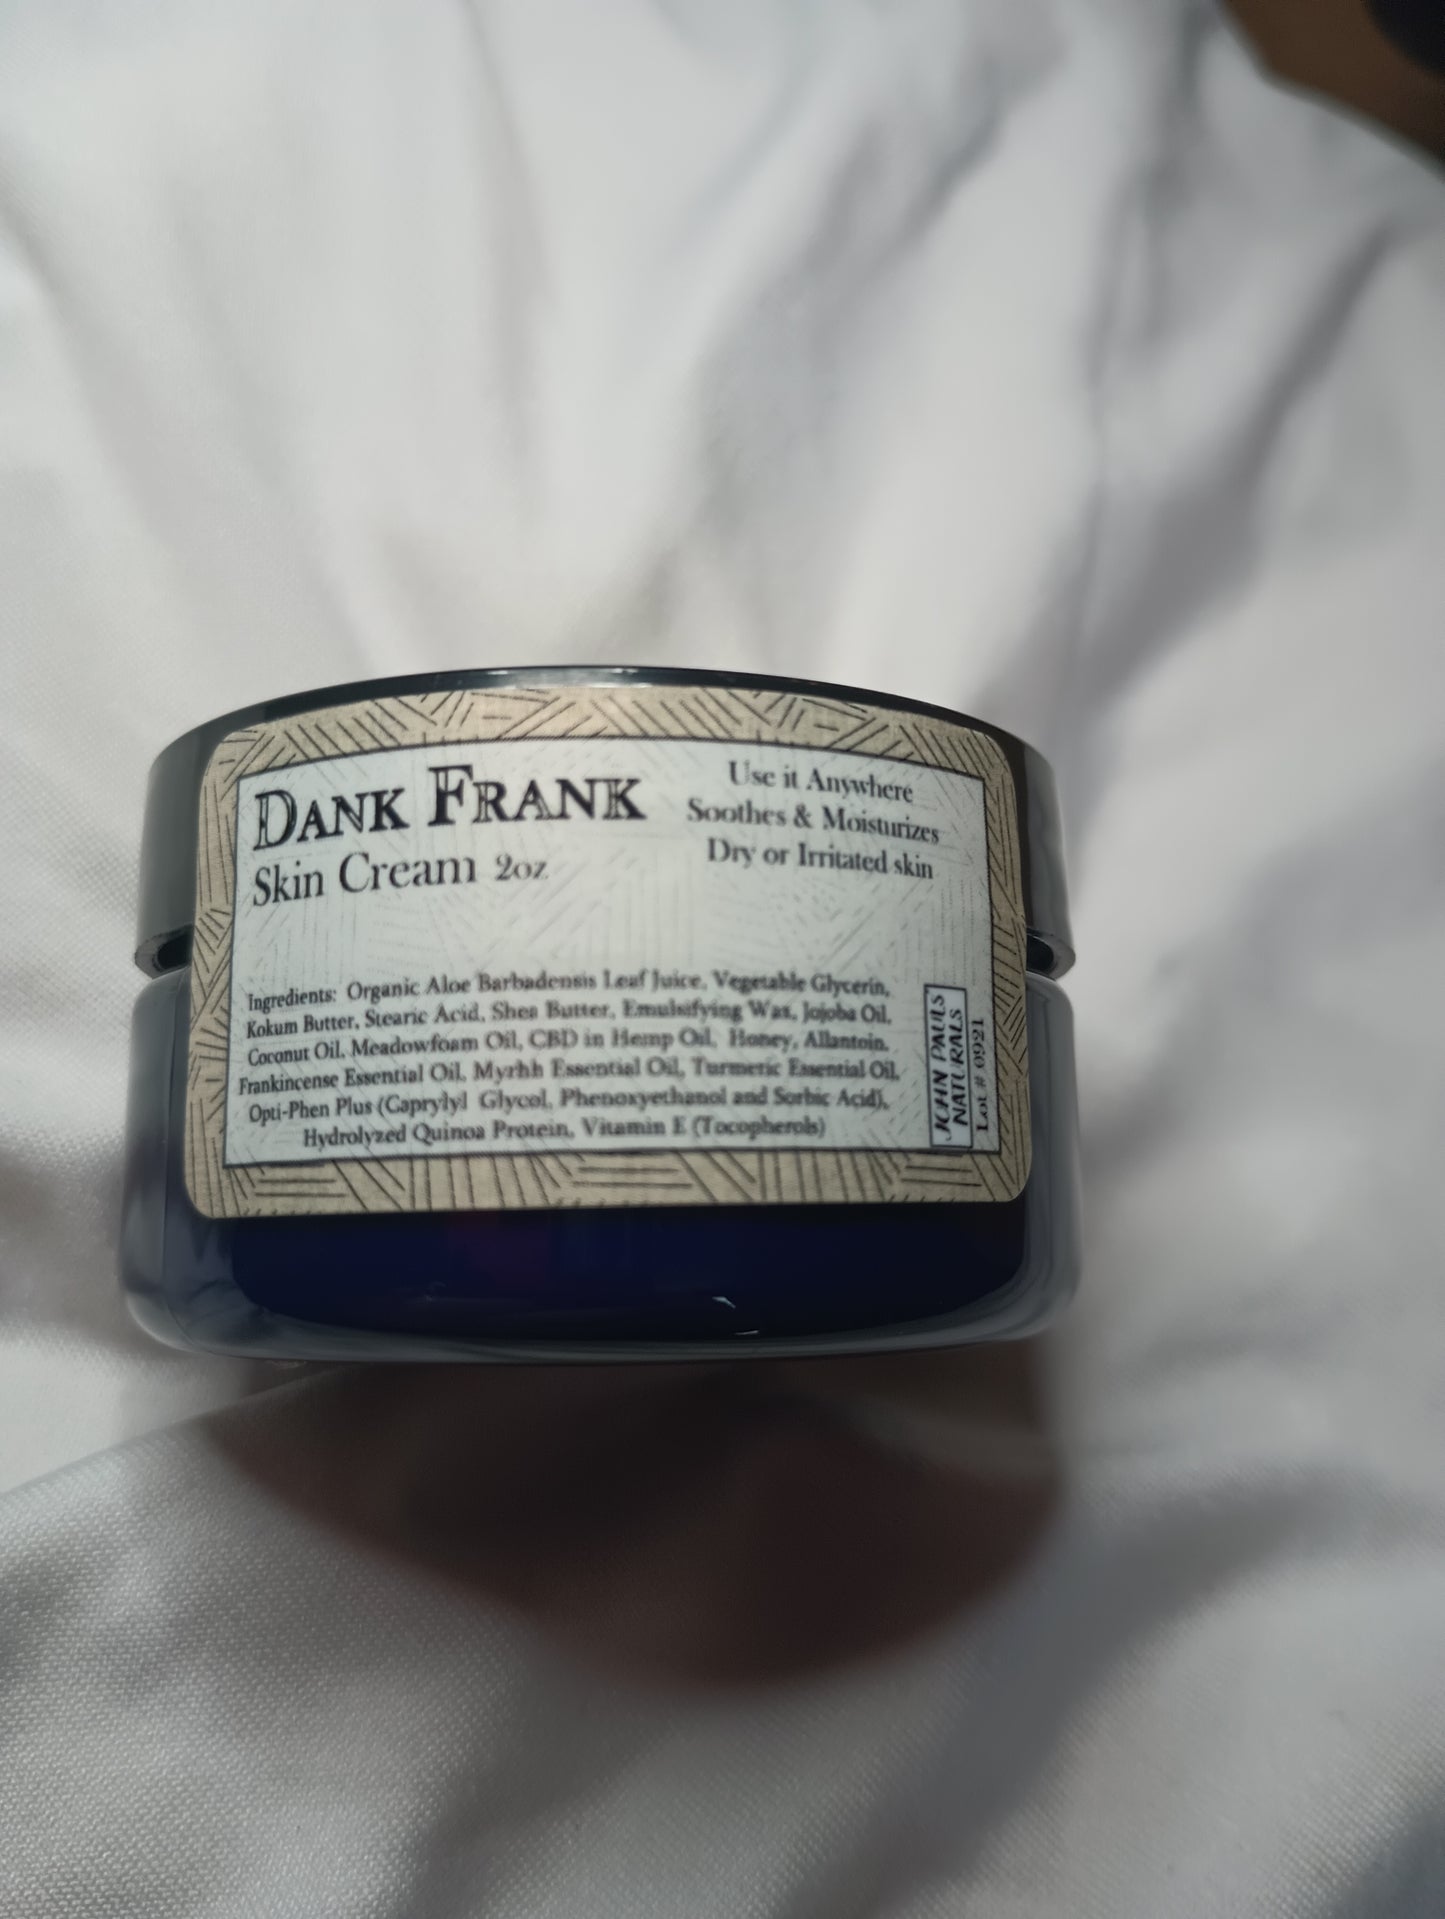 Skin Cream 2oz - Dank Frank